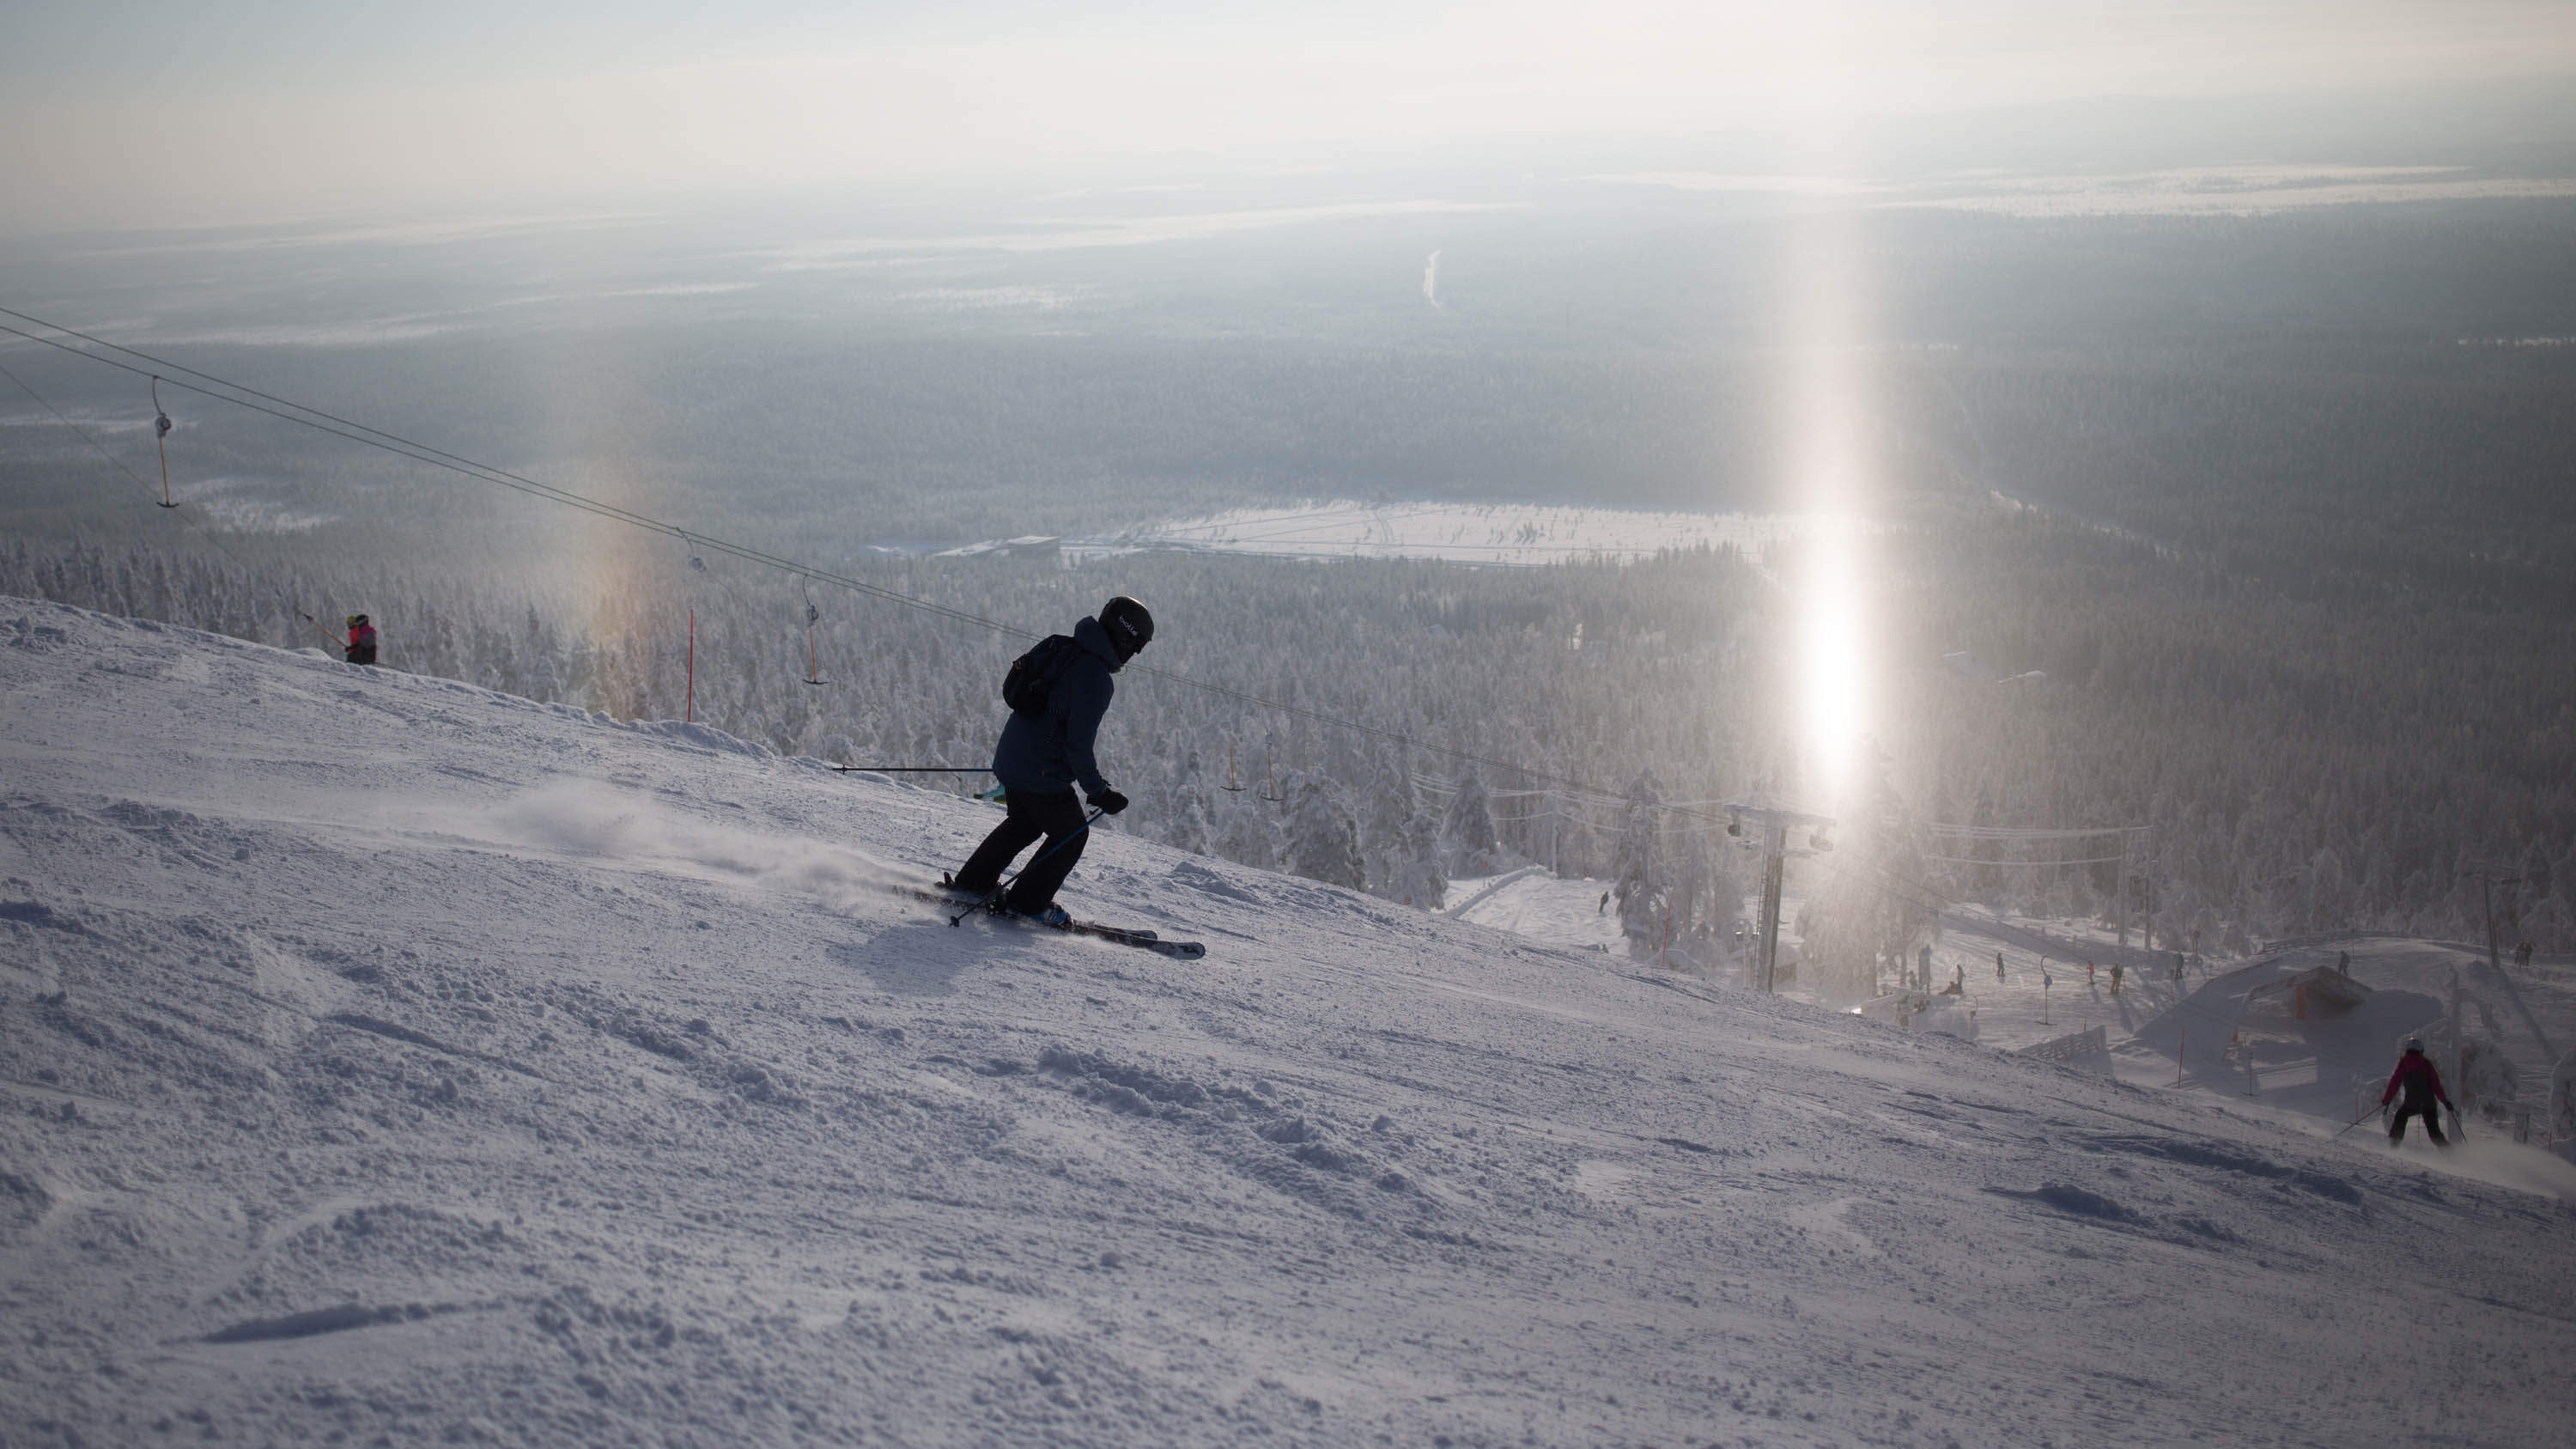 Levi Lapland: Finland's best ski resort | CNN